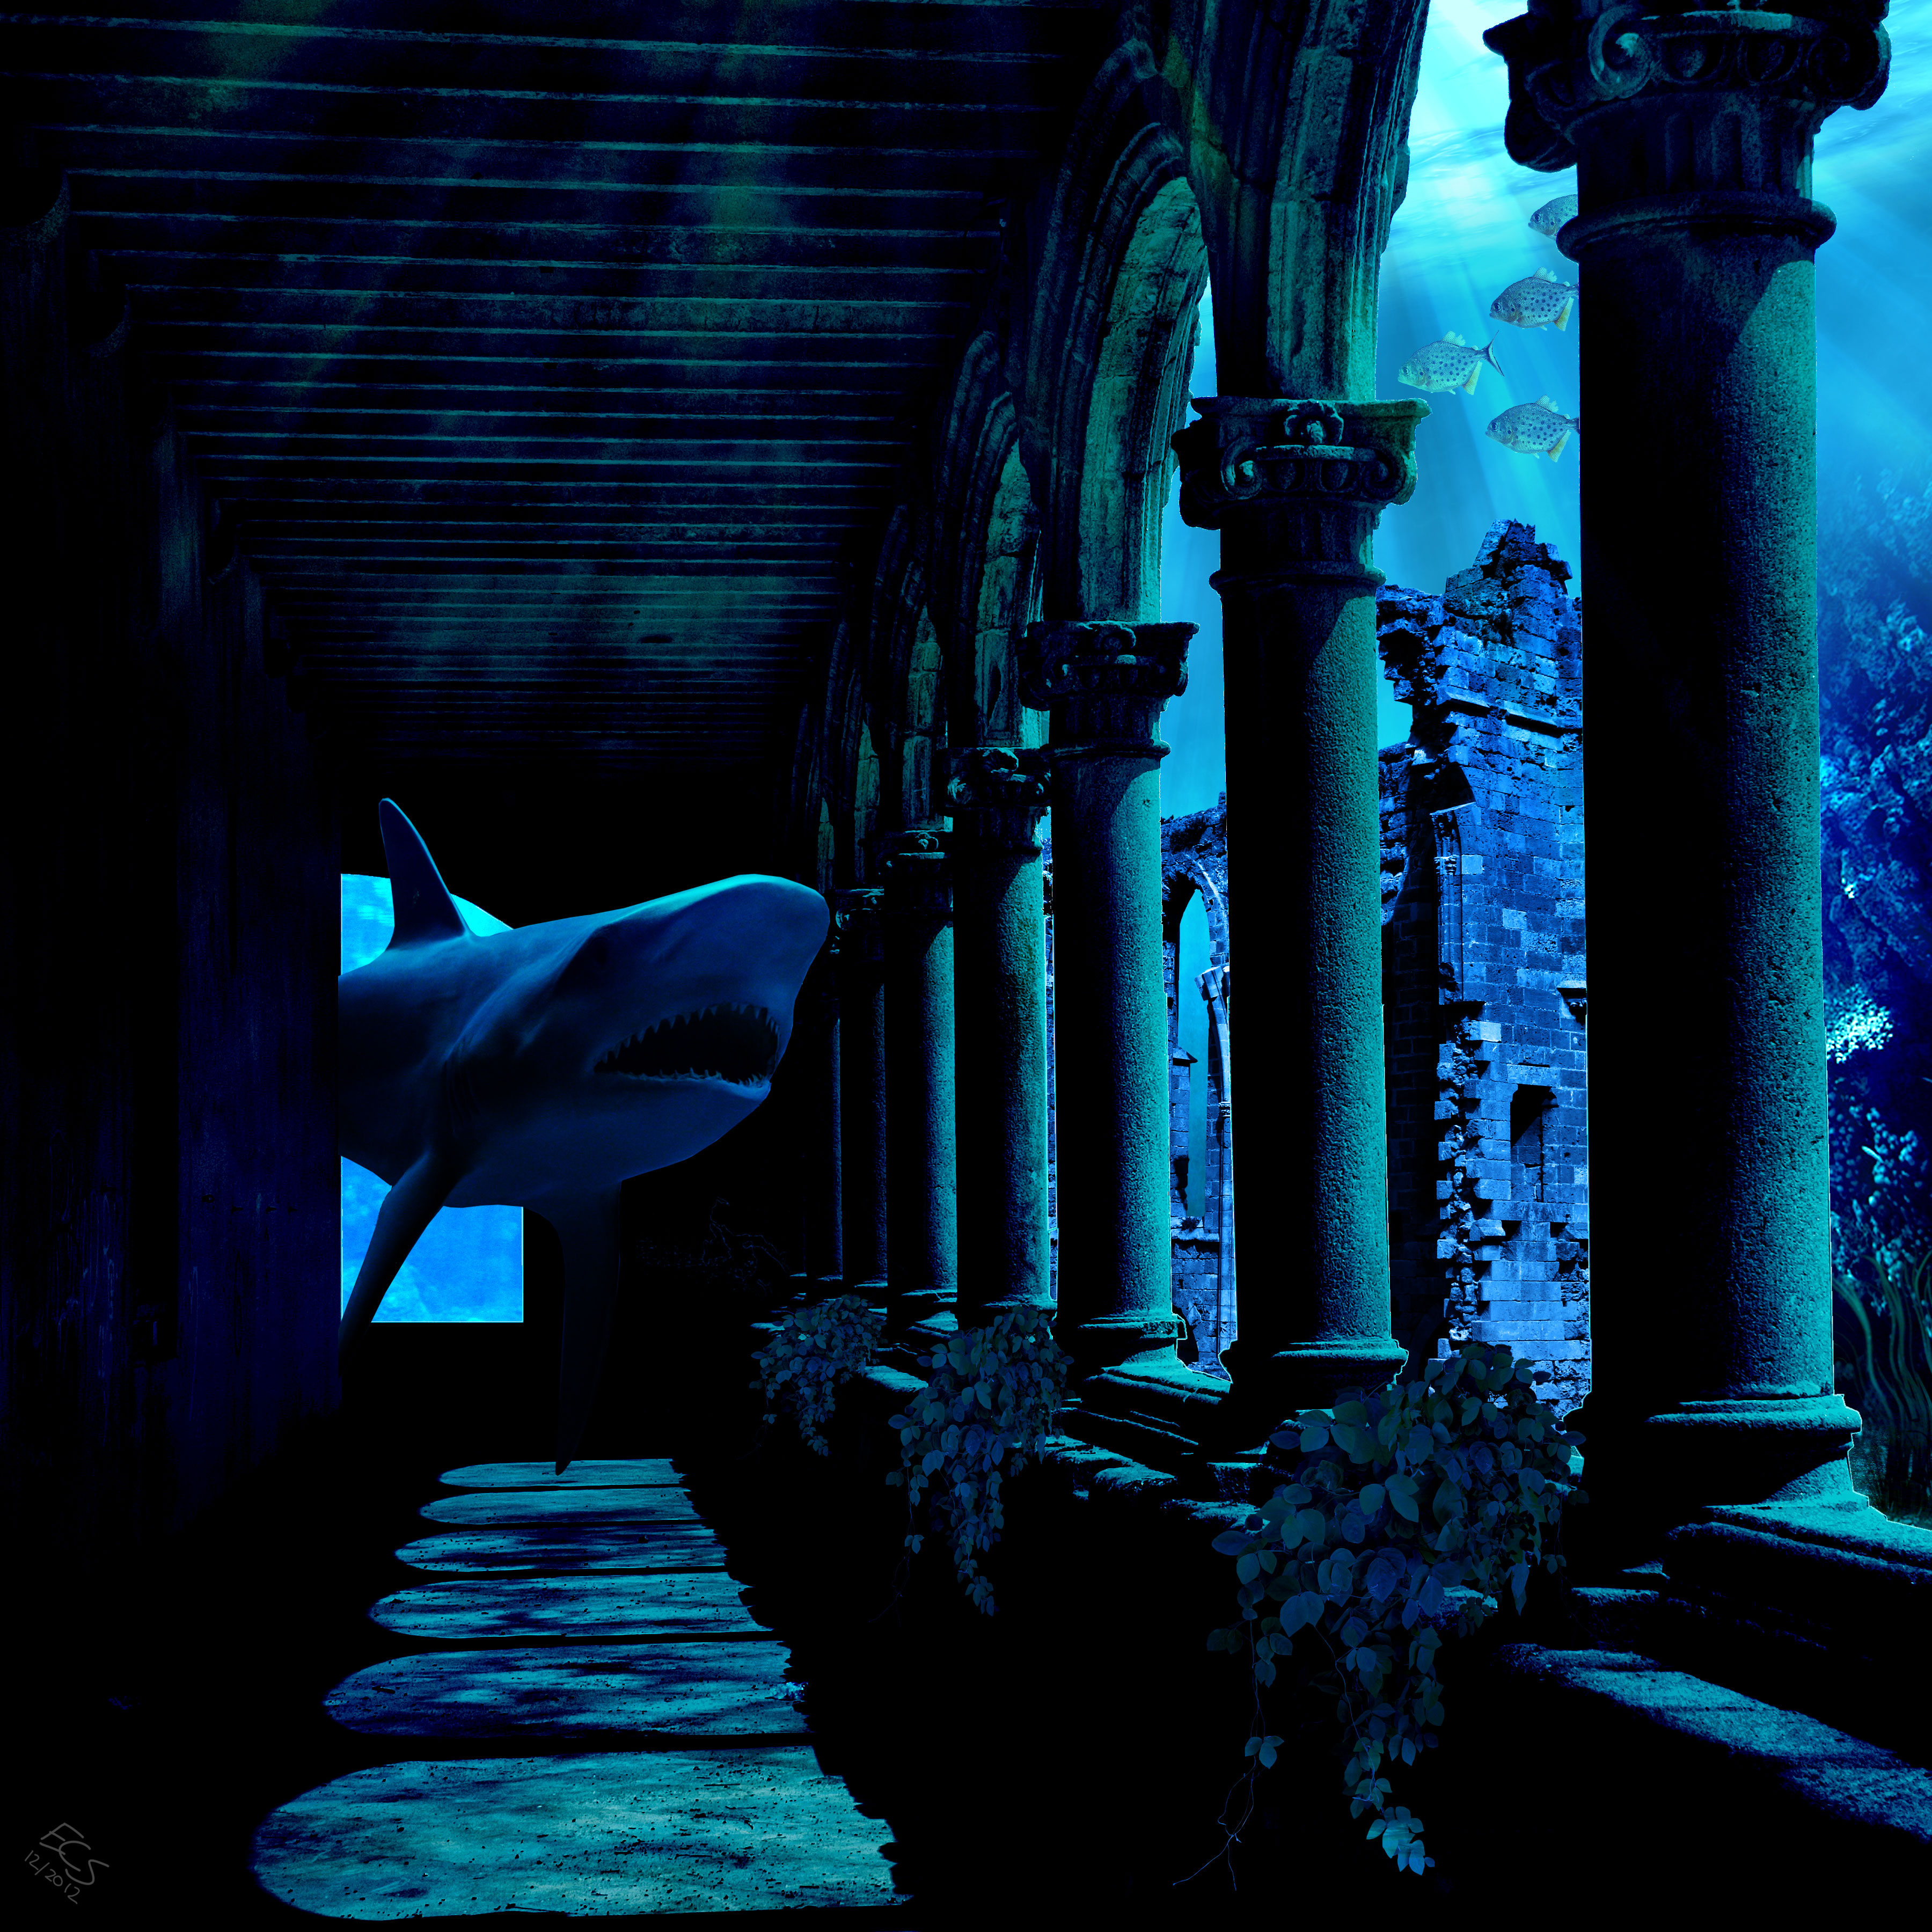 Atlantis | Photo manipulation by Elizabeth C. Spillman